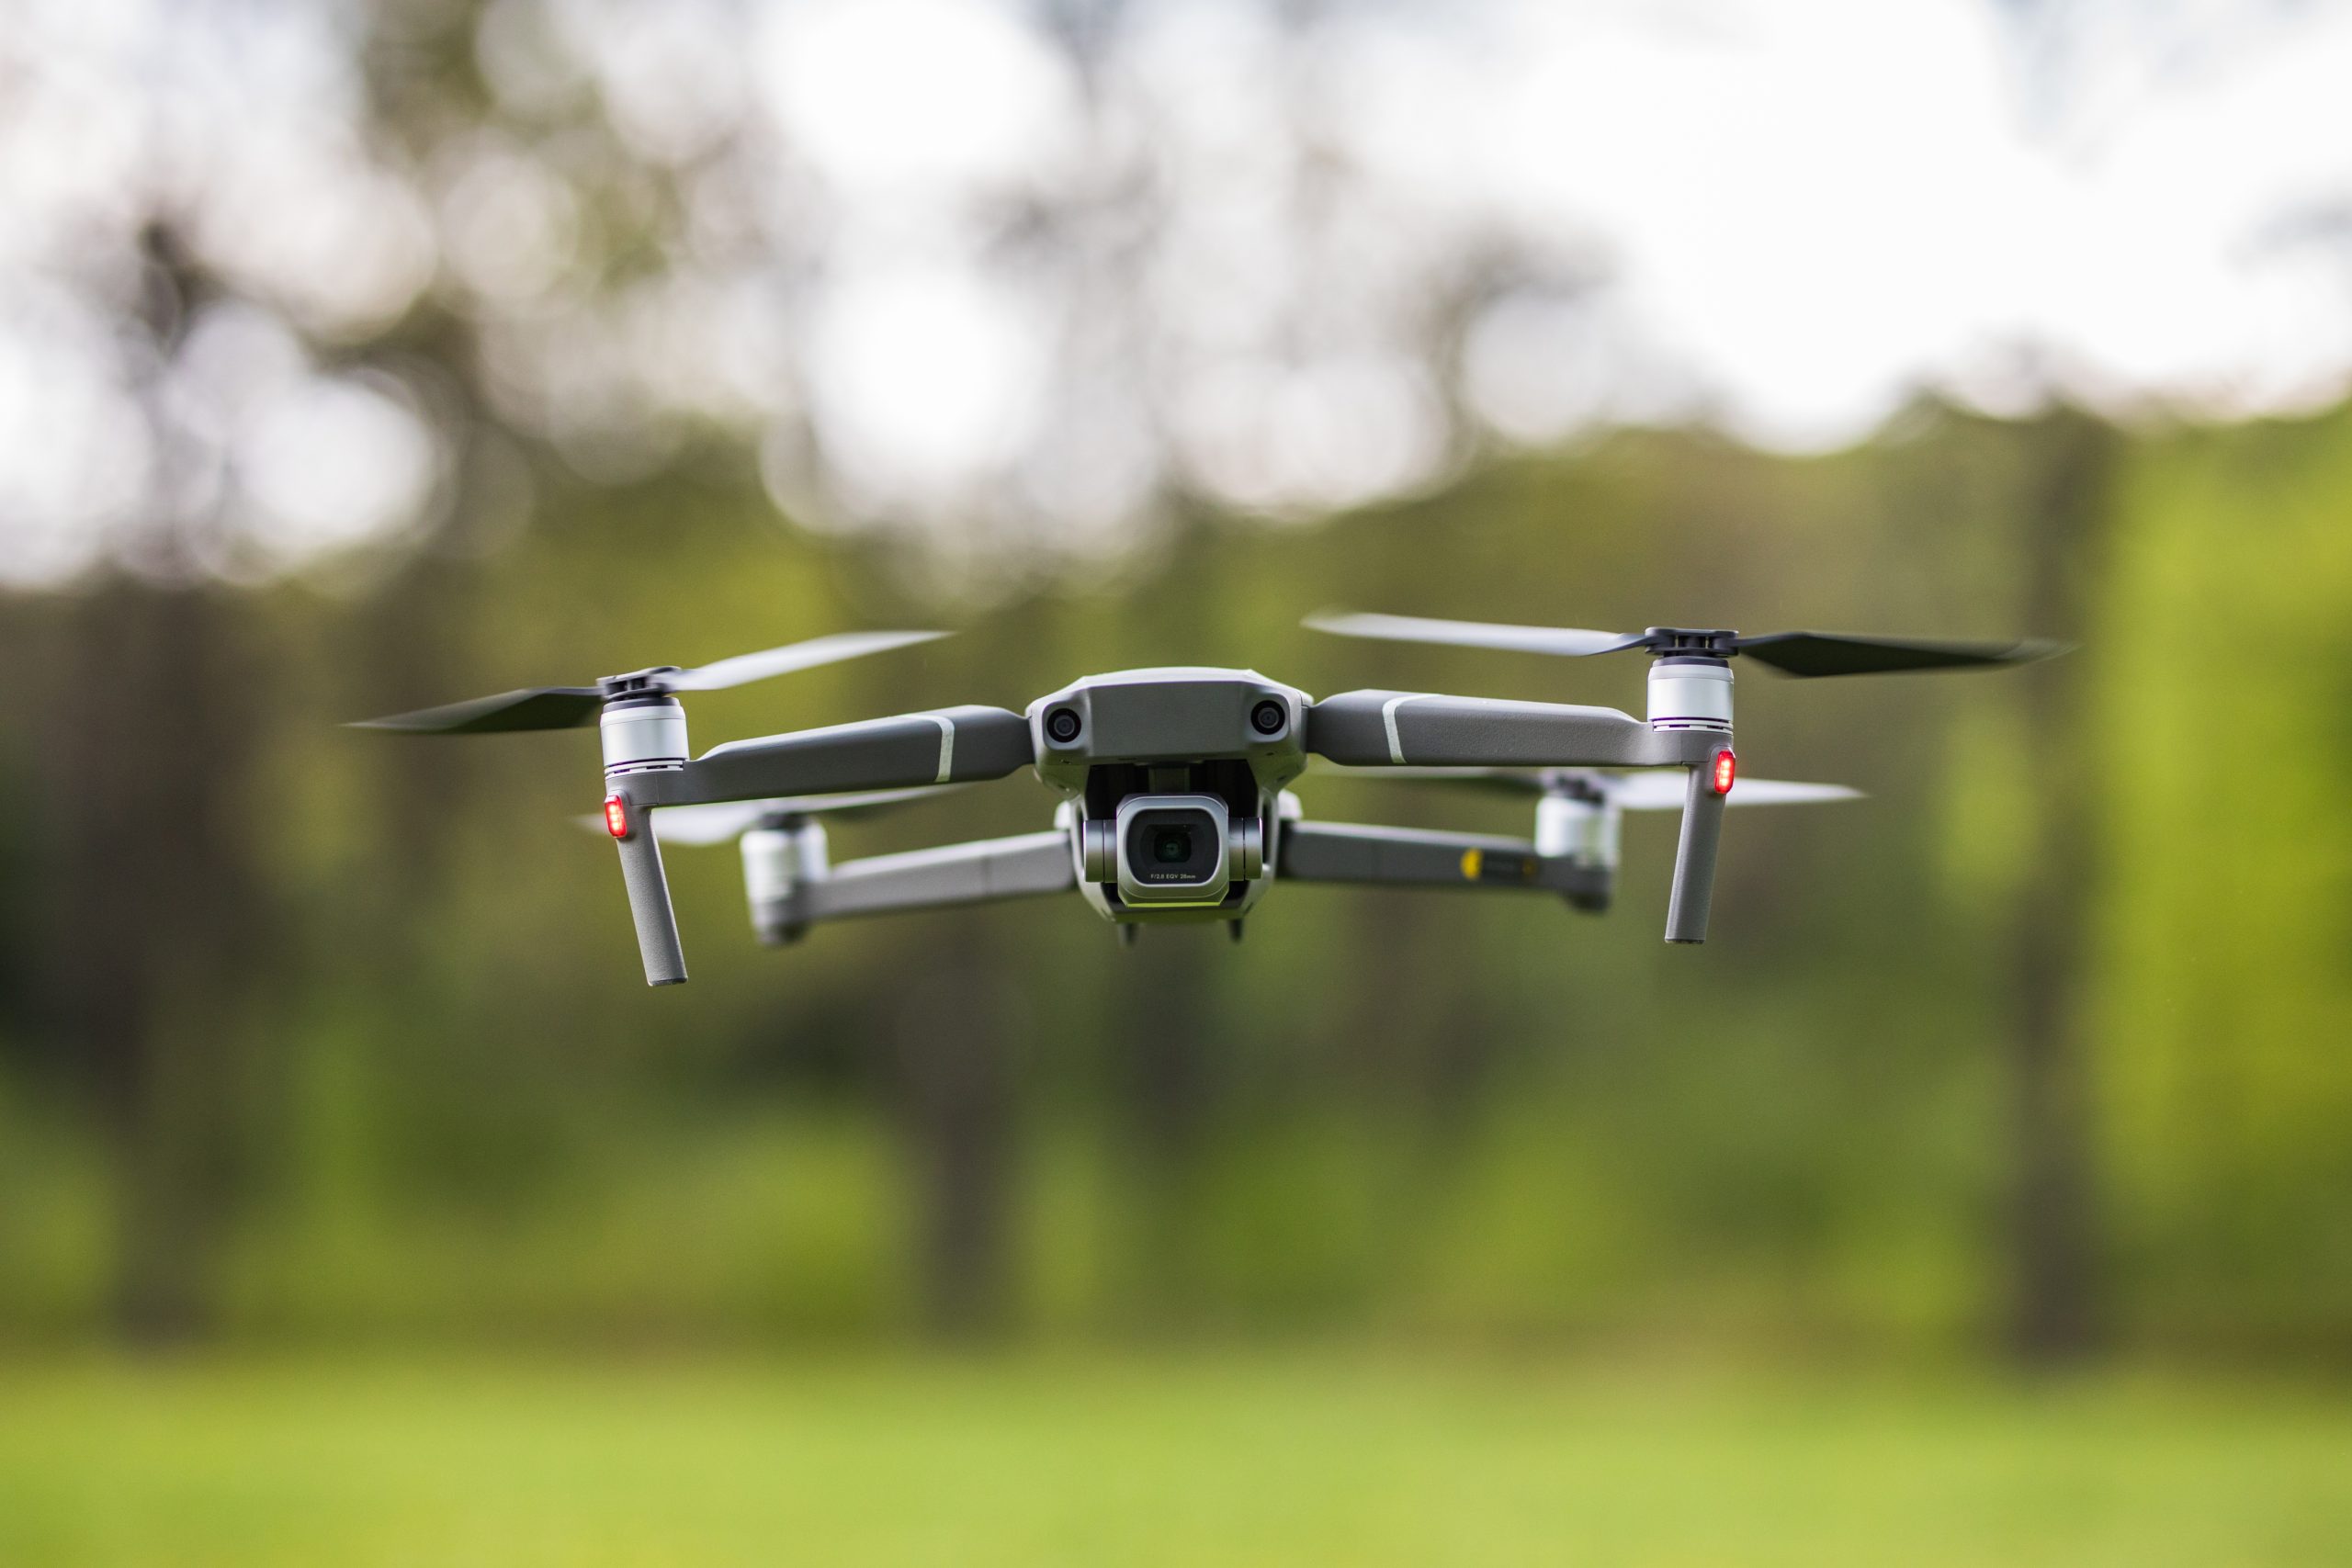 Servicios de innovación en aplicación de agricultura de precisión a través de drones.